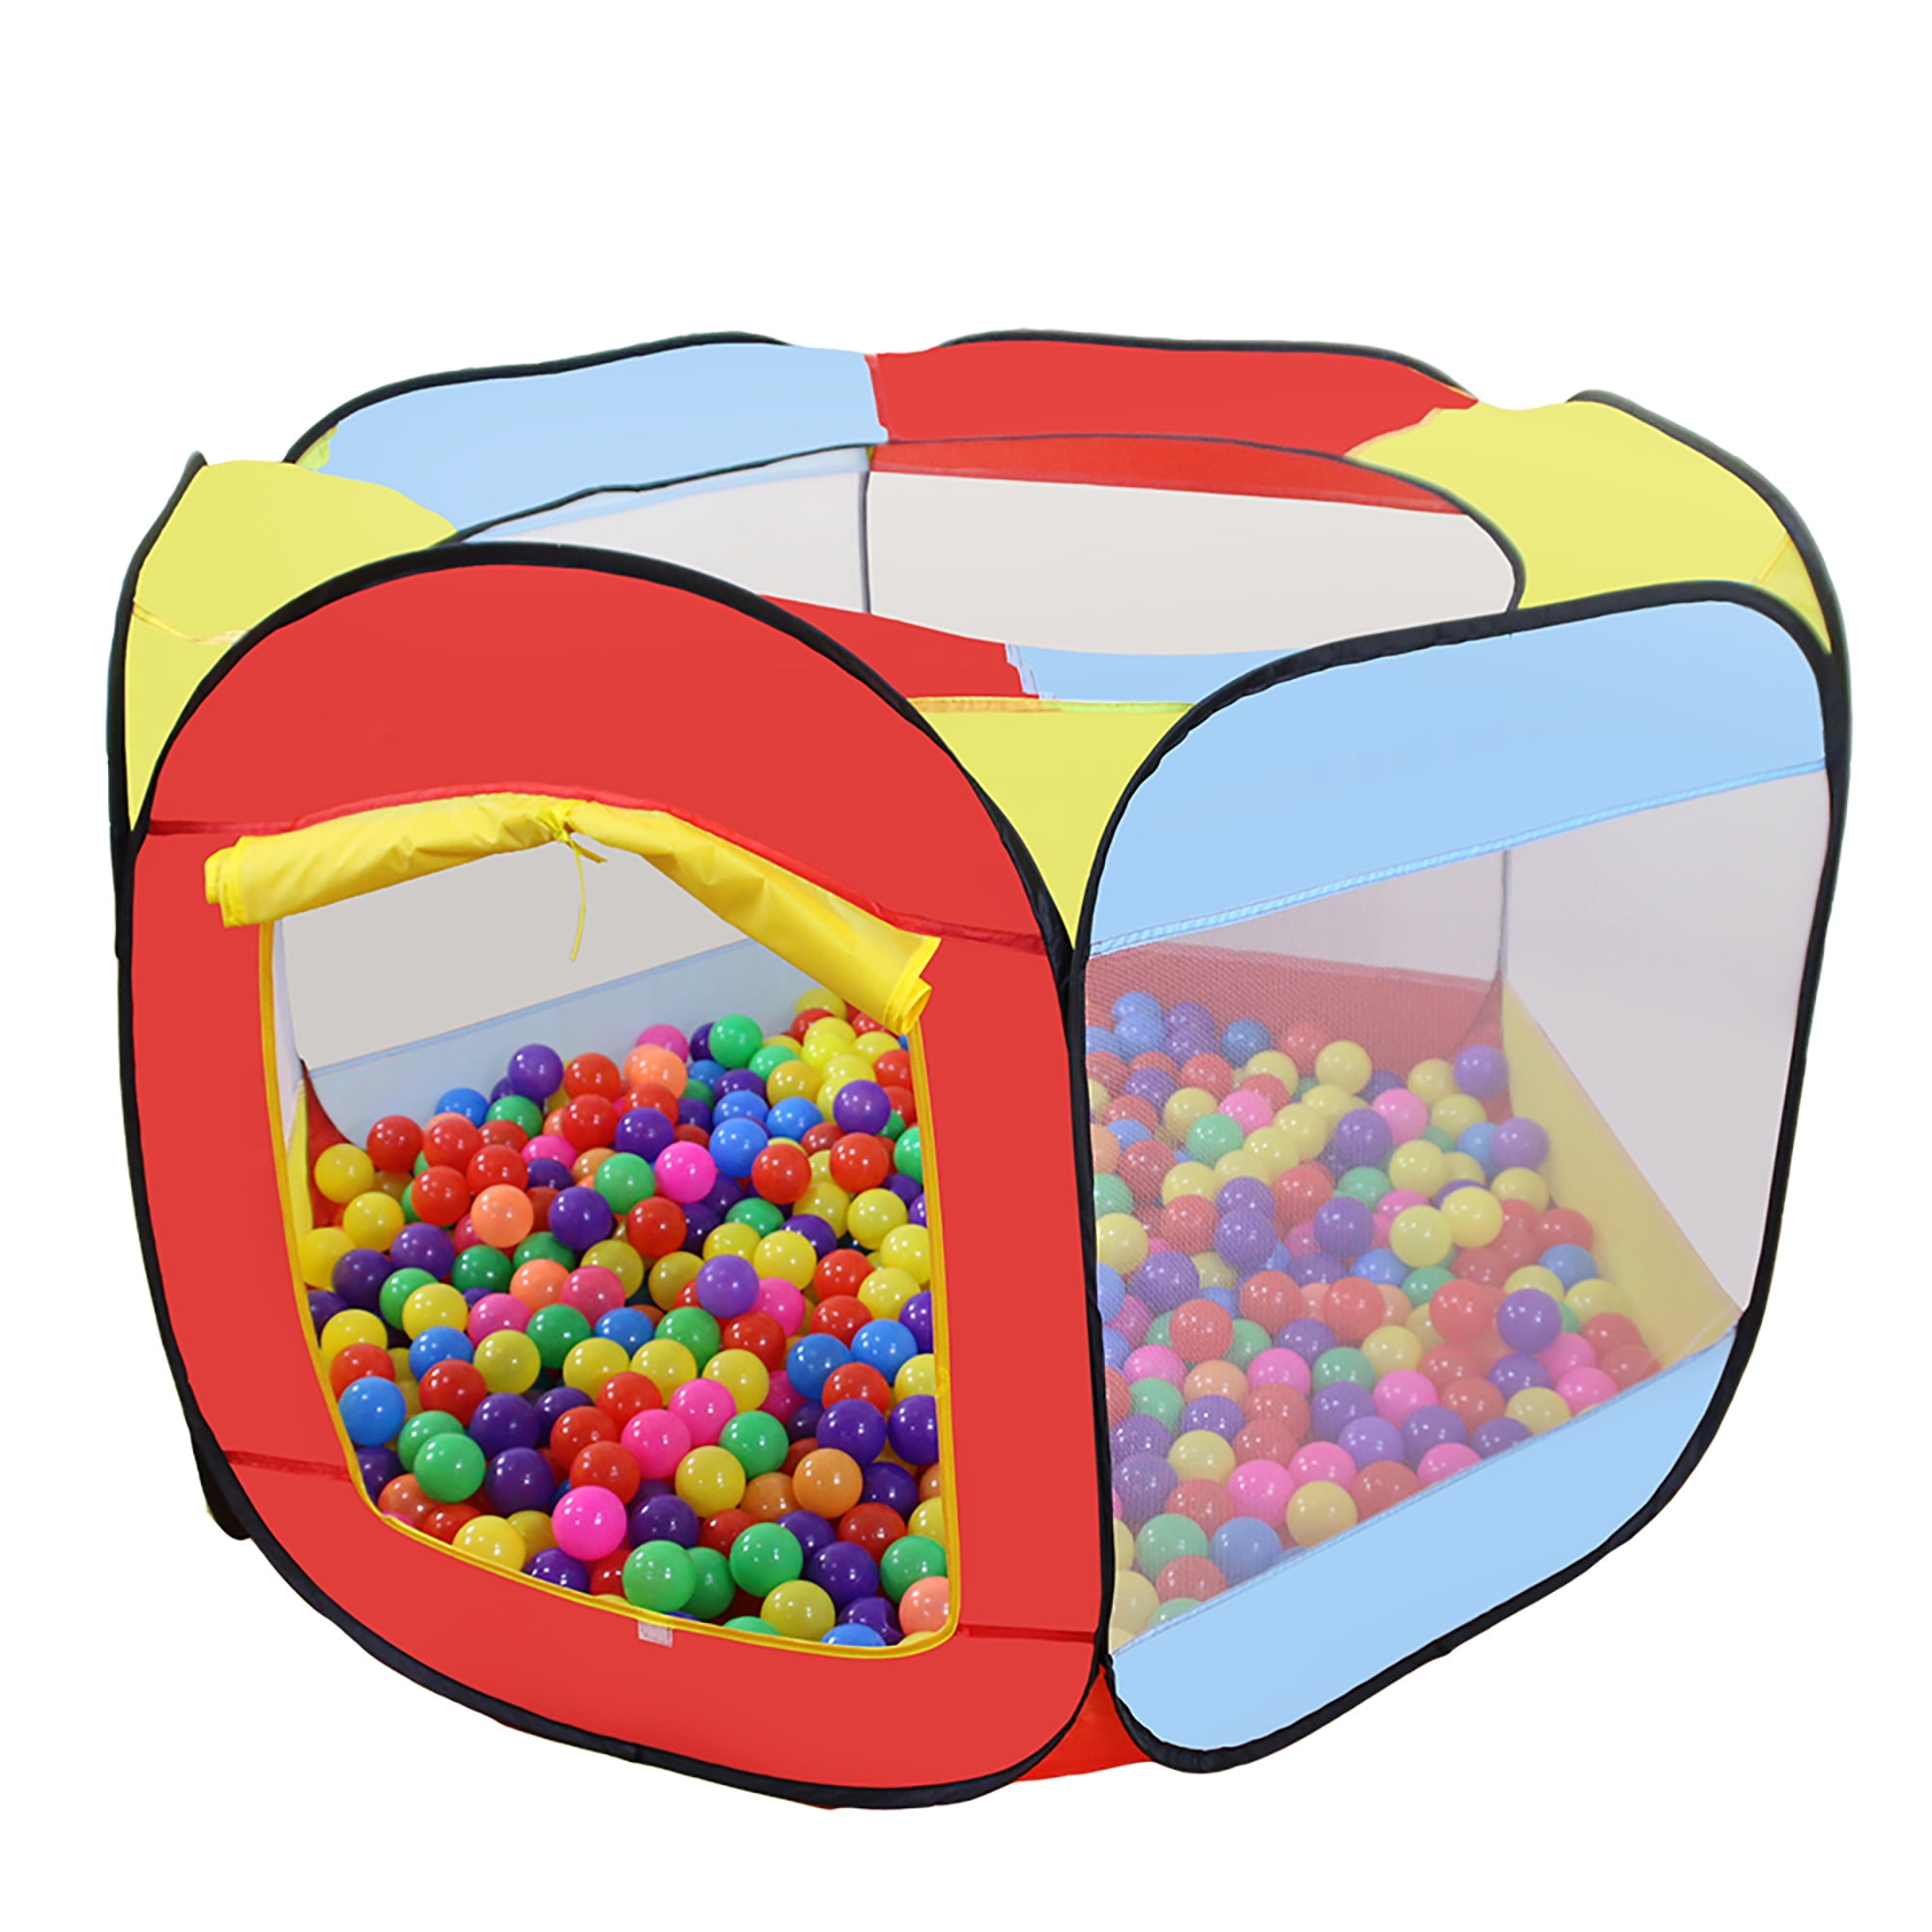 Popup Baby Ball Pit Pool Outdoor Indoor Play Tent Playpen Nursery Hut House Toy 